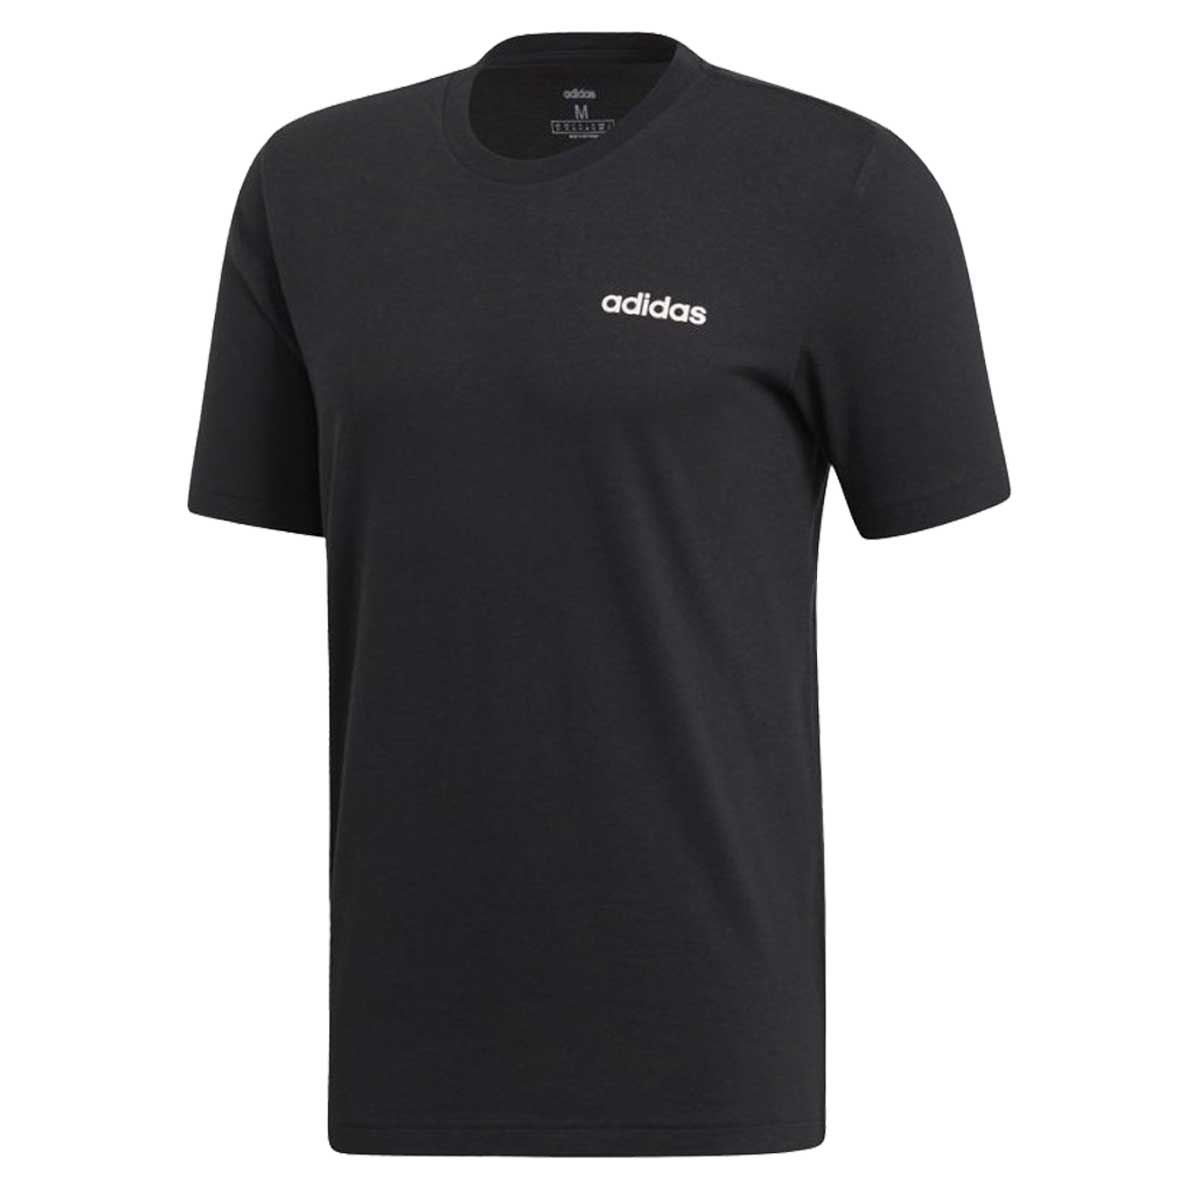 Adidas Essentials Plain Mens T-Shirt (Black/White) Online India